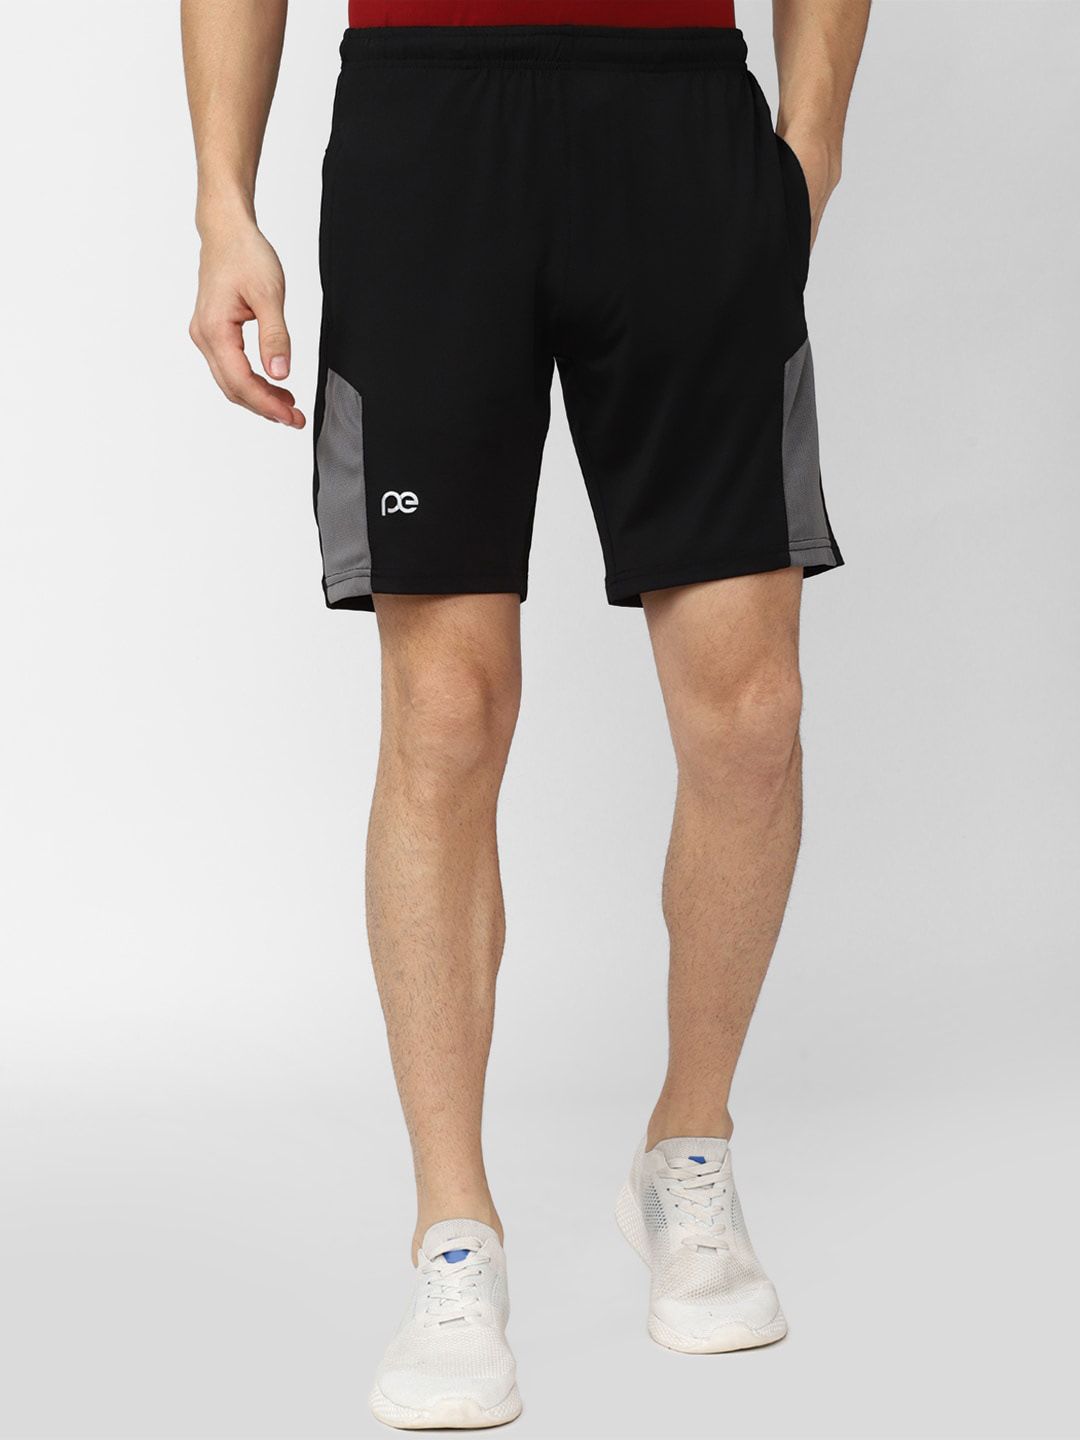 Peter England Casuals Men Slim Fit Sports Shorts